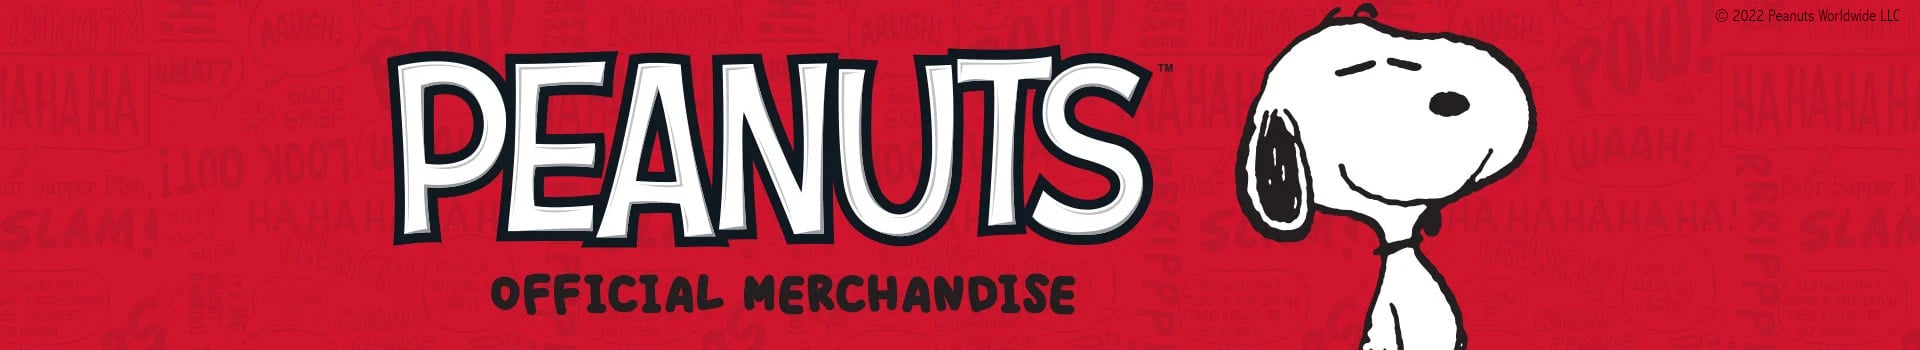 Peanuts - Official Merchandise